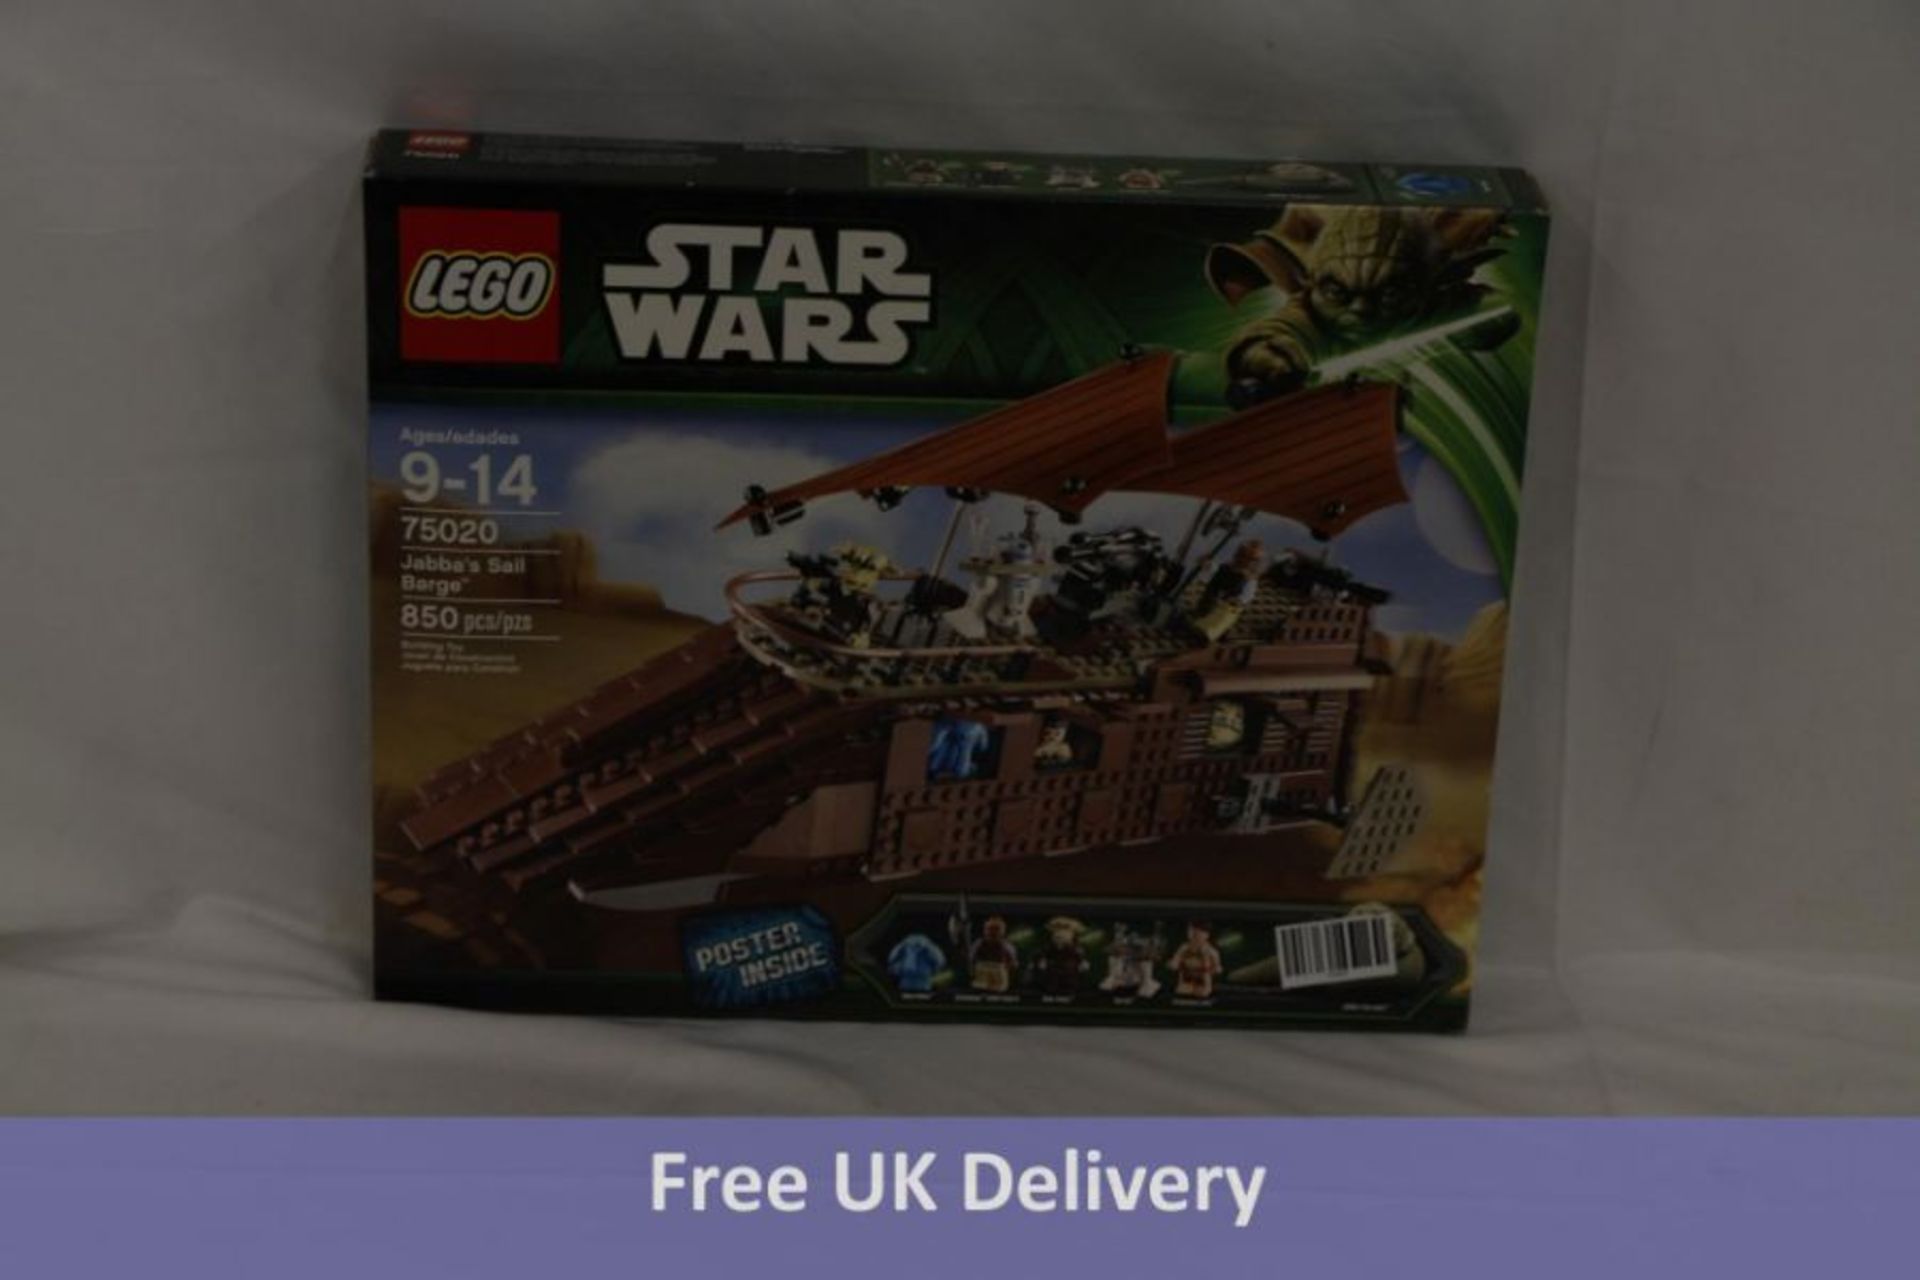 Lego Star Wars Jabba’s Sail Barge 850Pcs, 9-14 Years